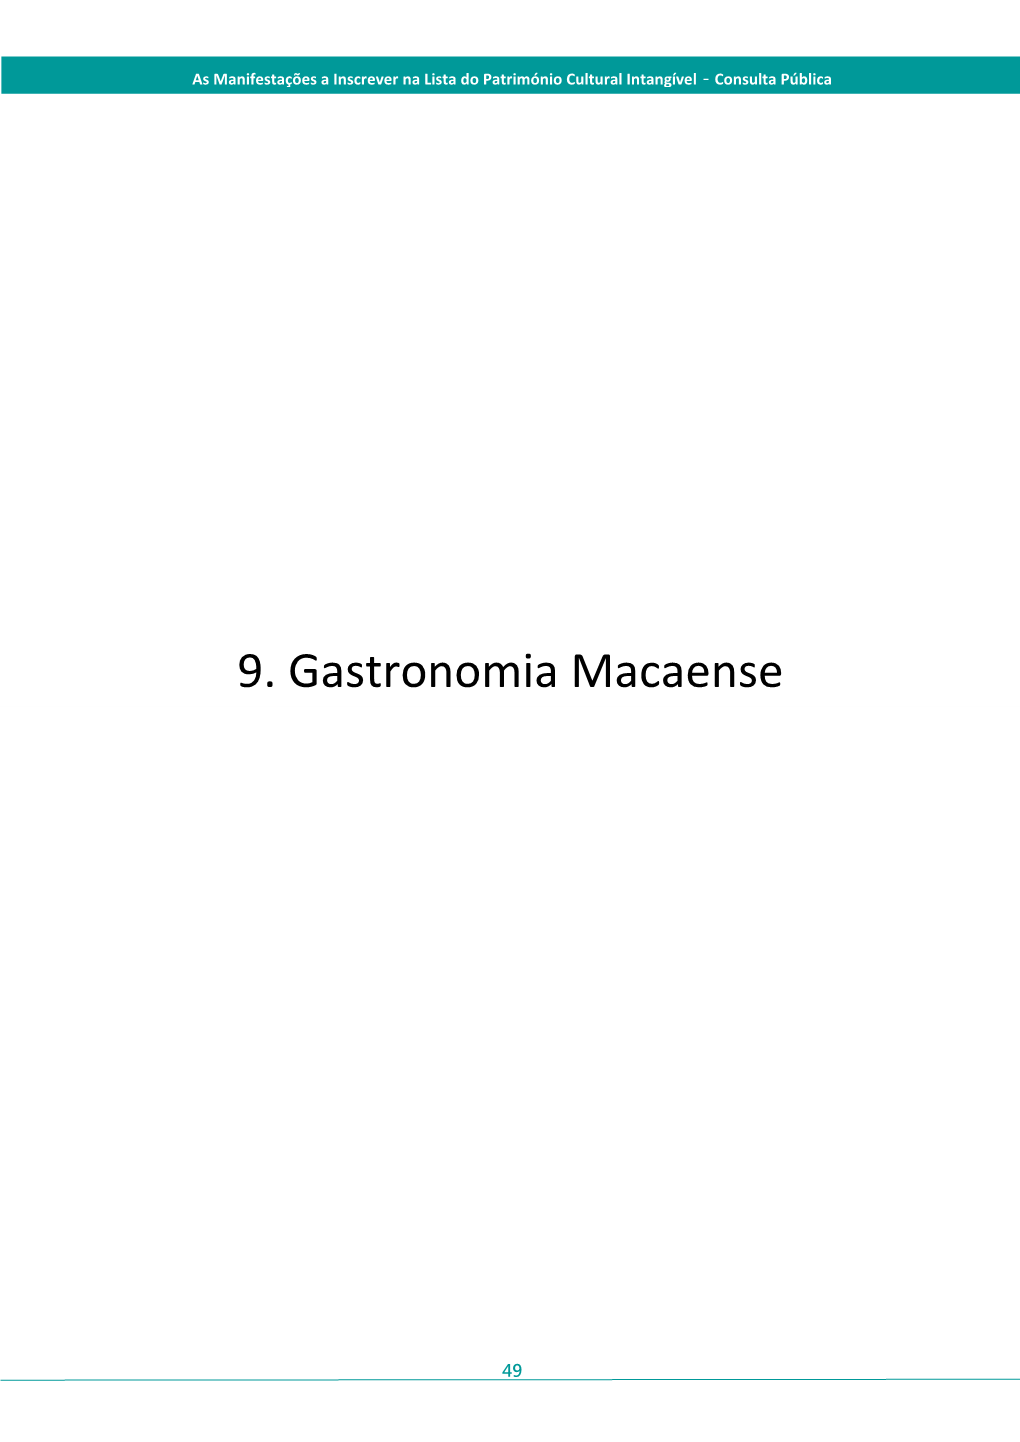 9. Gastronomia Macaense